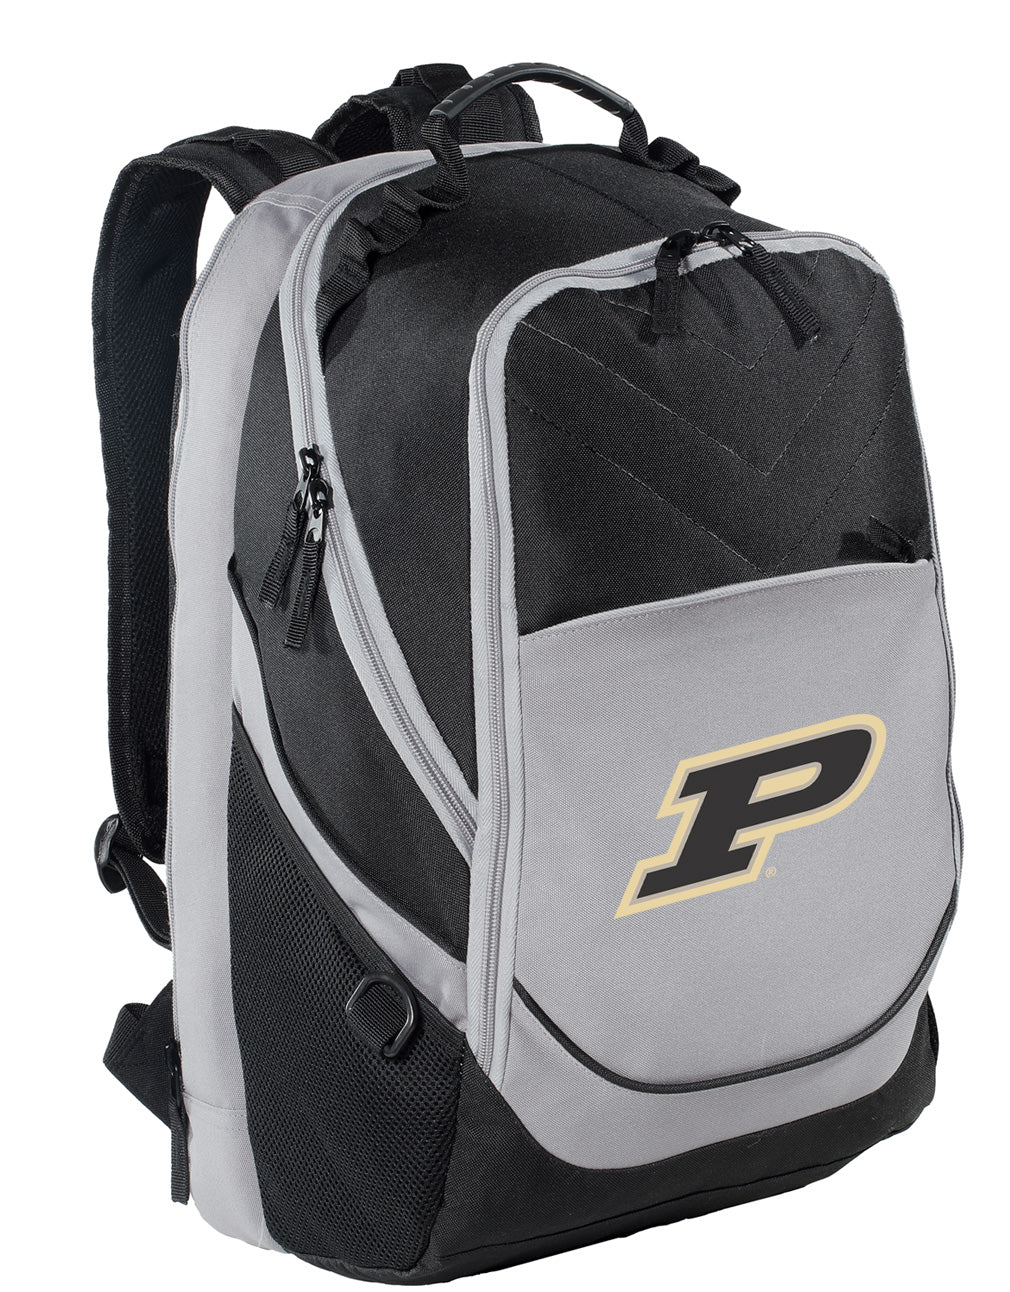 Purdue University Backpack Purdue Laptop Computer Backpack